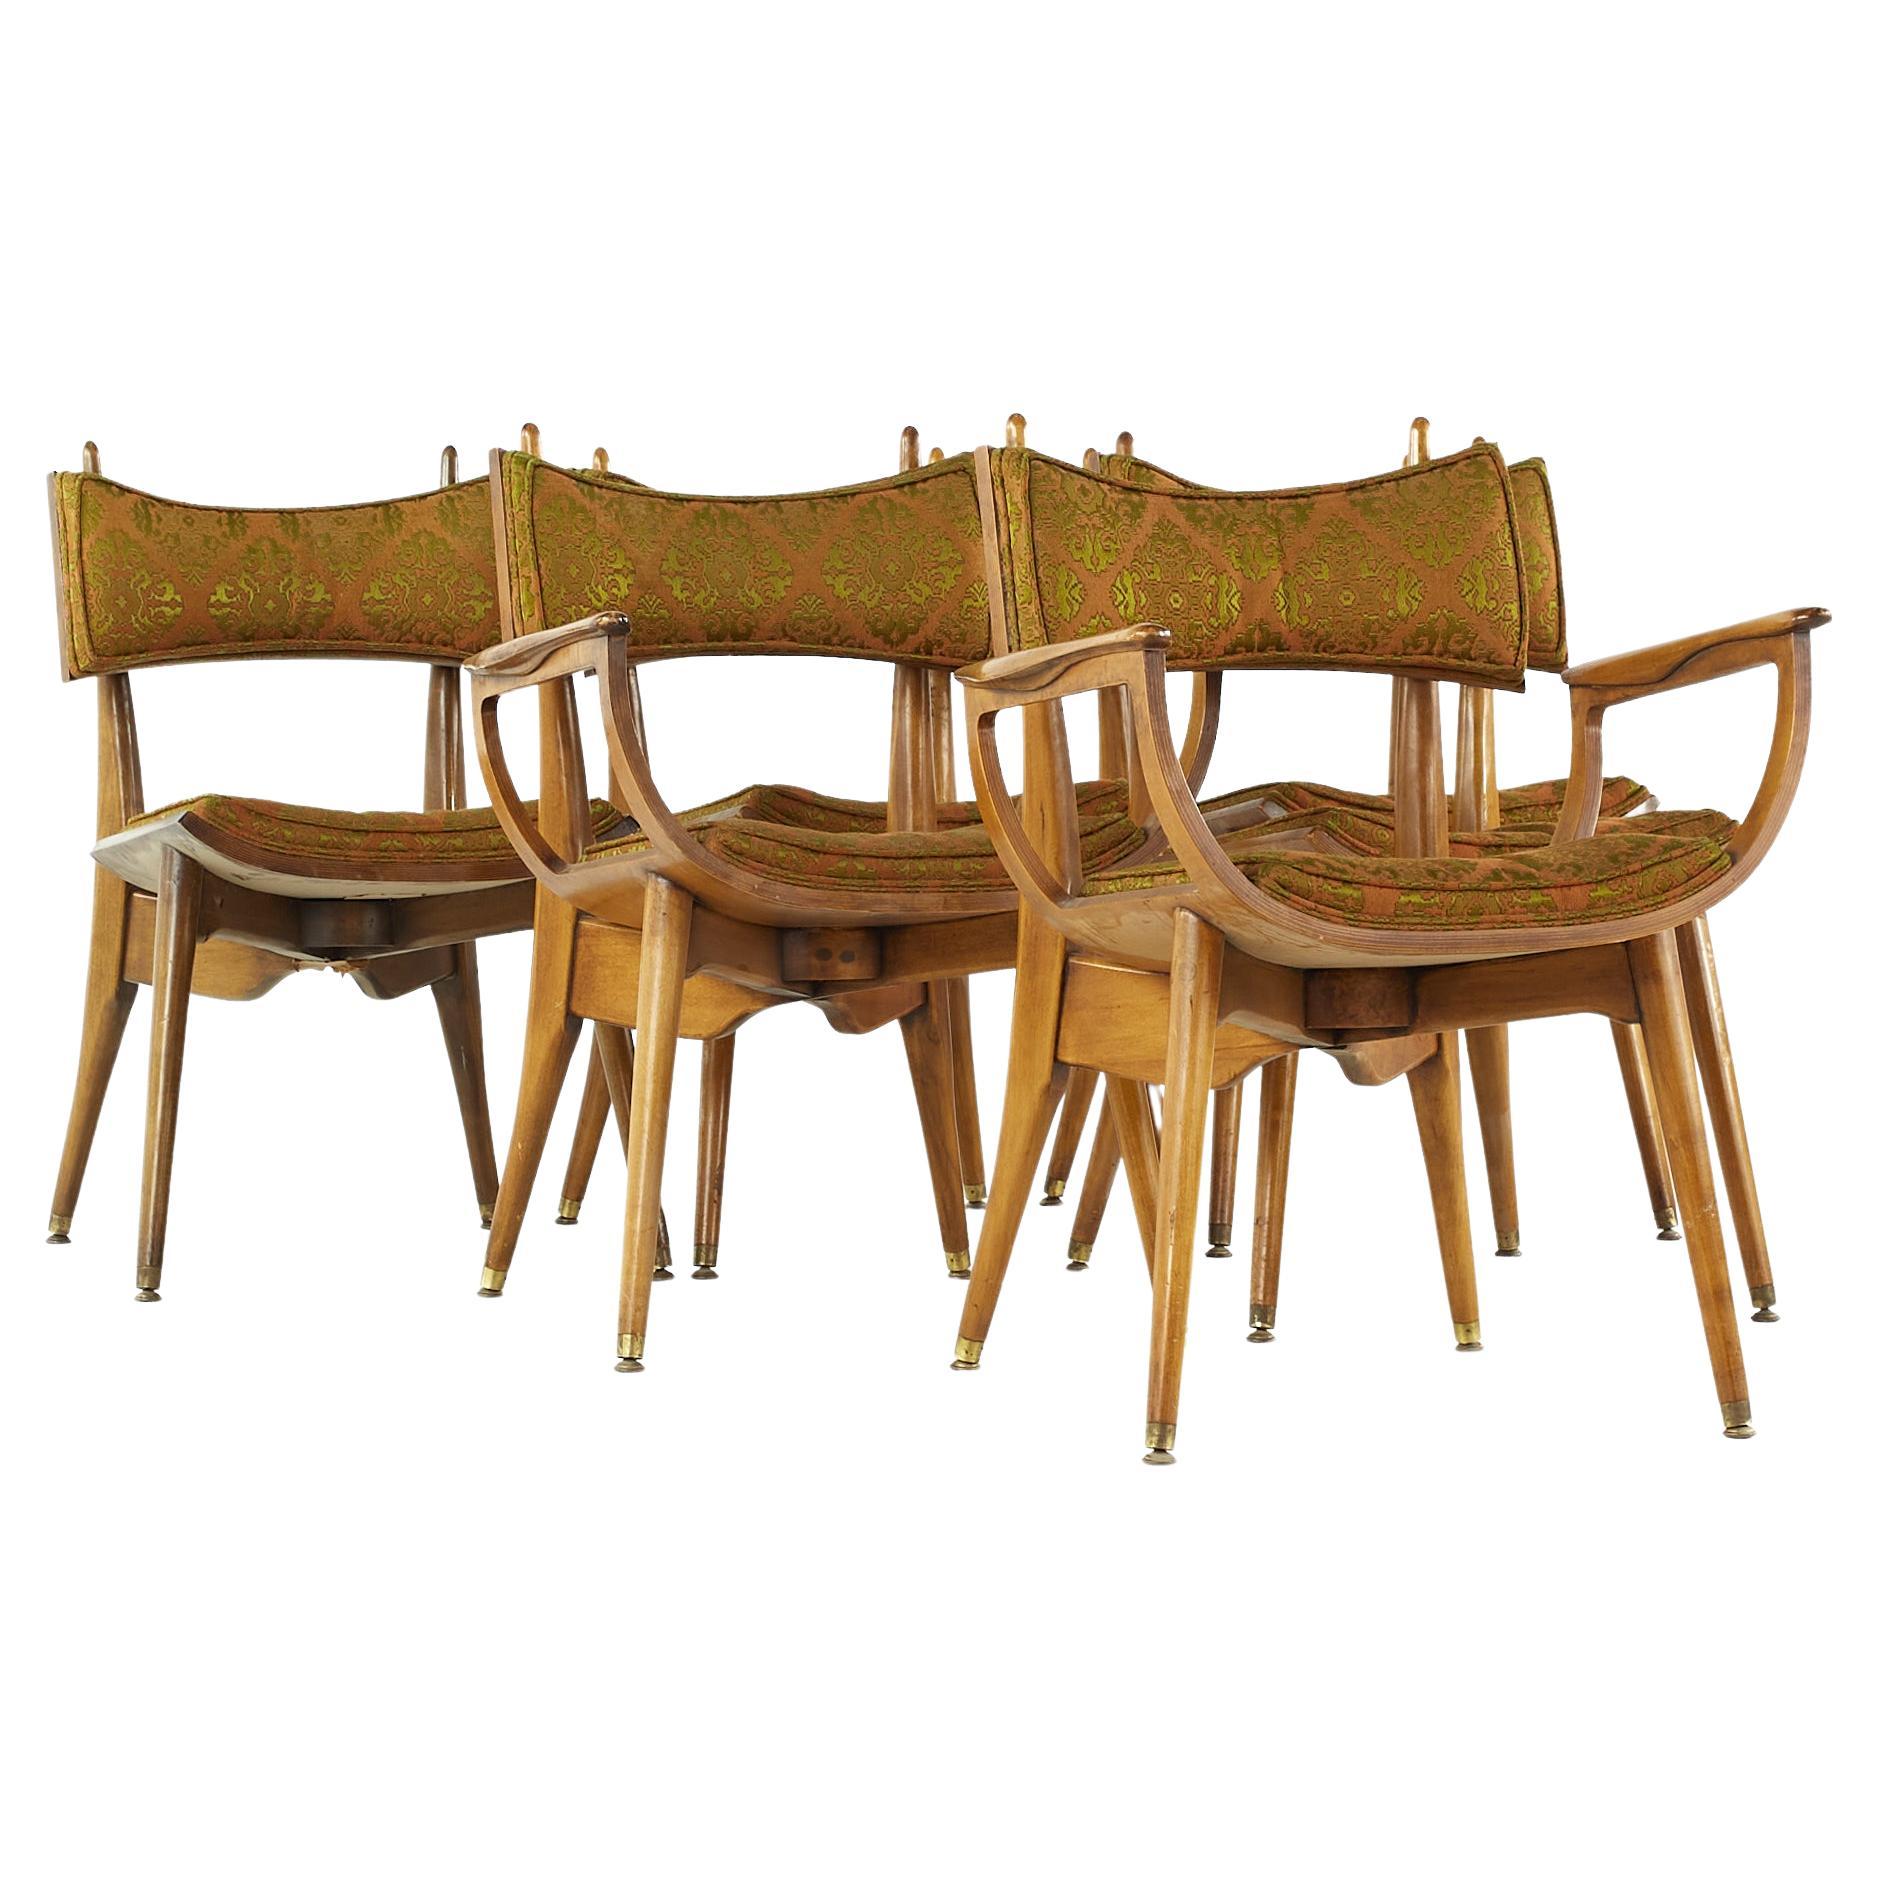 Harold Schwartz for Romweber Midcentury Burlwood Dining Chairs, Set of 6